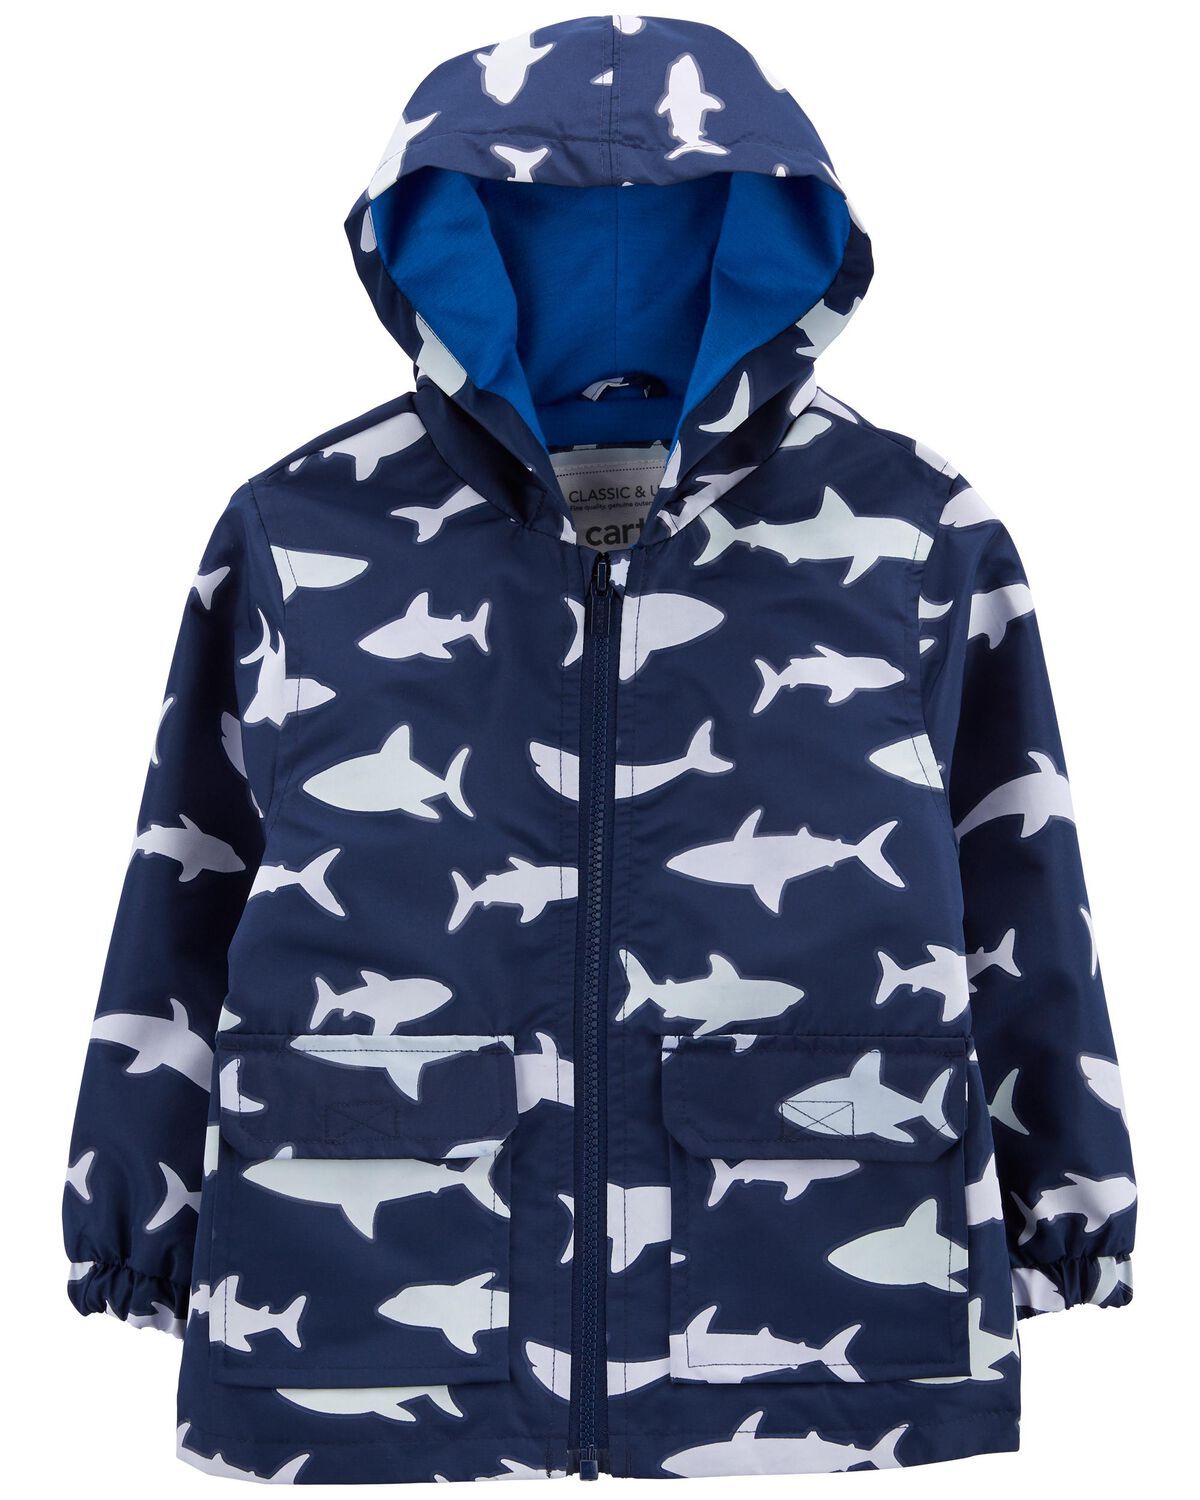 Navy Toddler Shark Color-Changing Rain Jacket | carters.com | Carter's